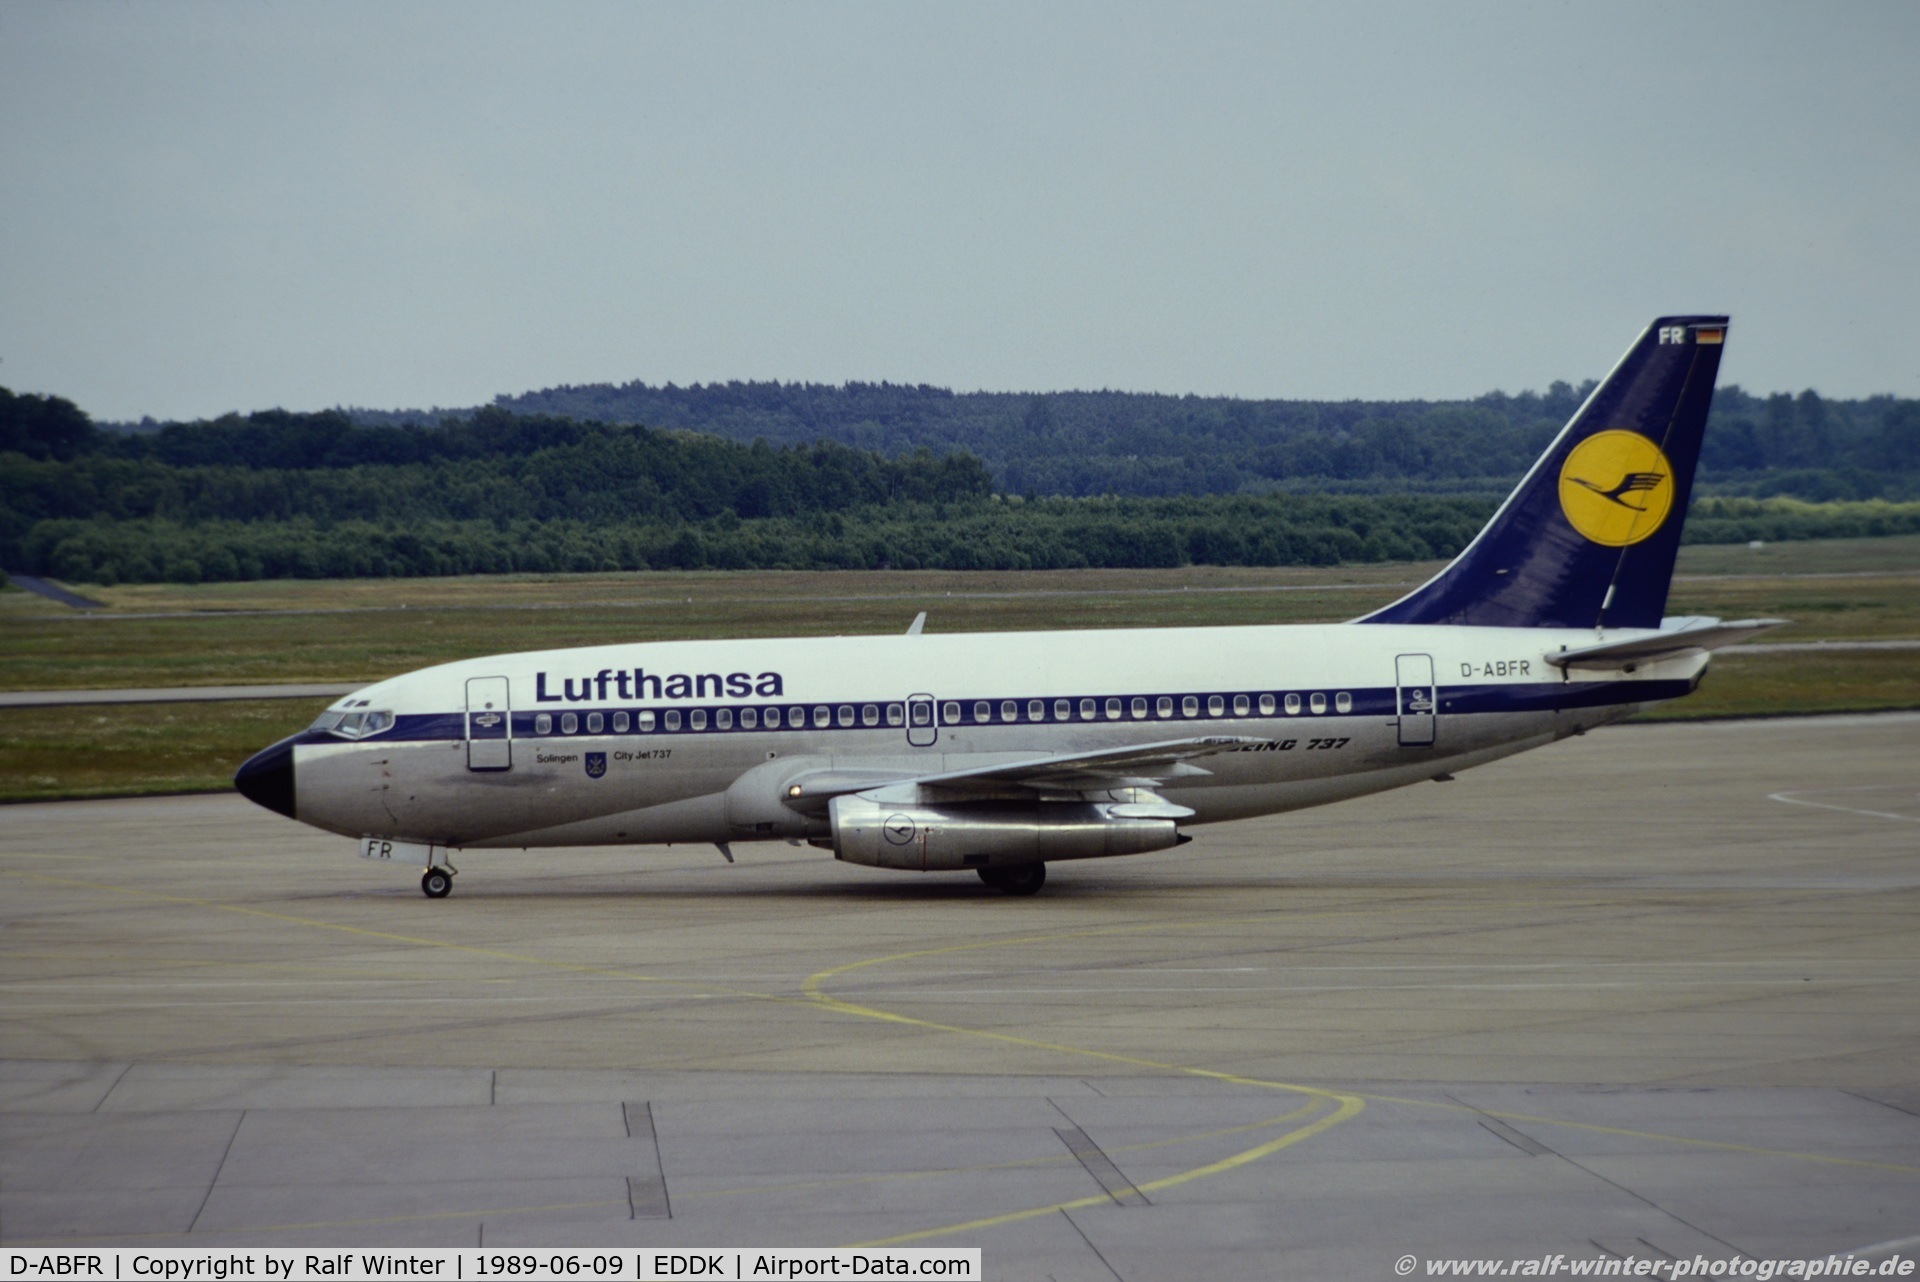 D-ABFR, 1981 Boeing 737-230 C/N 22124, Boeing 737-230 - LH DLH Lufthansa 'Solingen' - 22124 - D-ABFR - 09.06.1989 - CGN